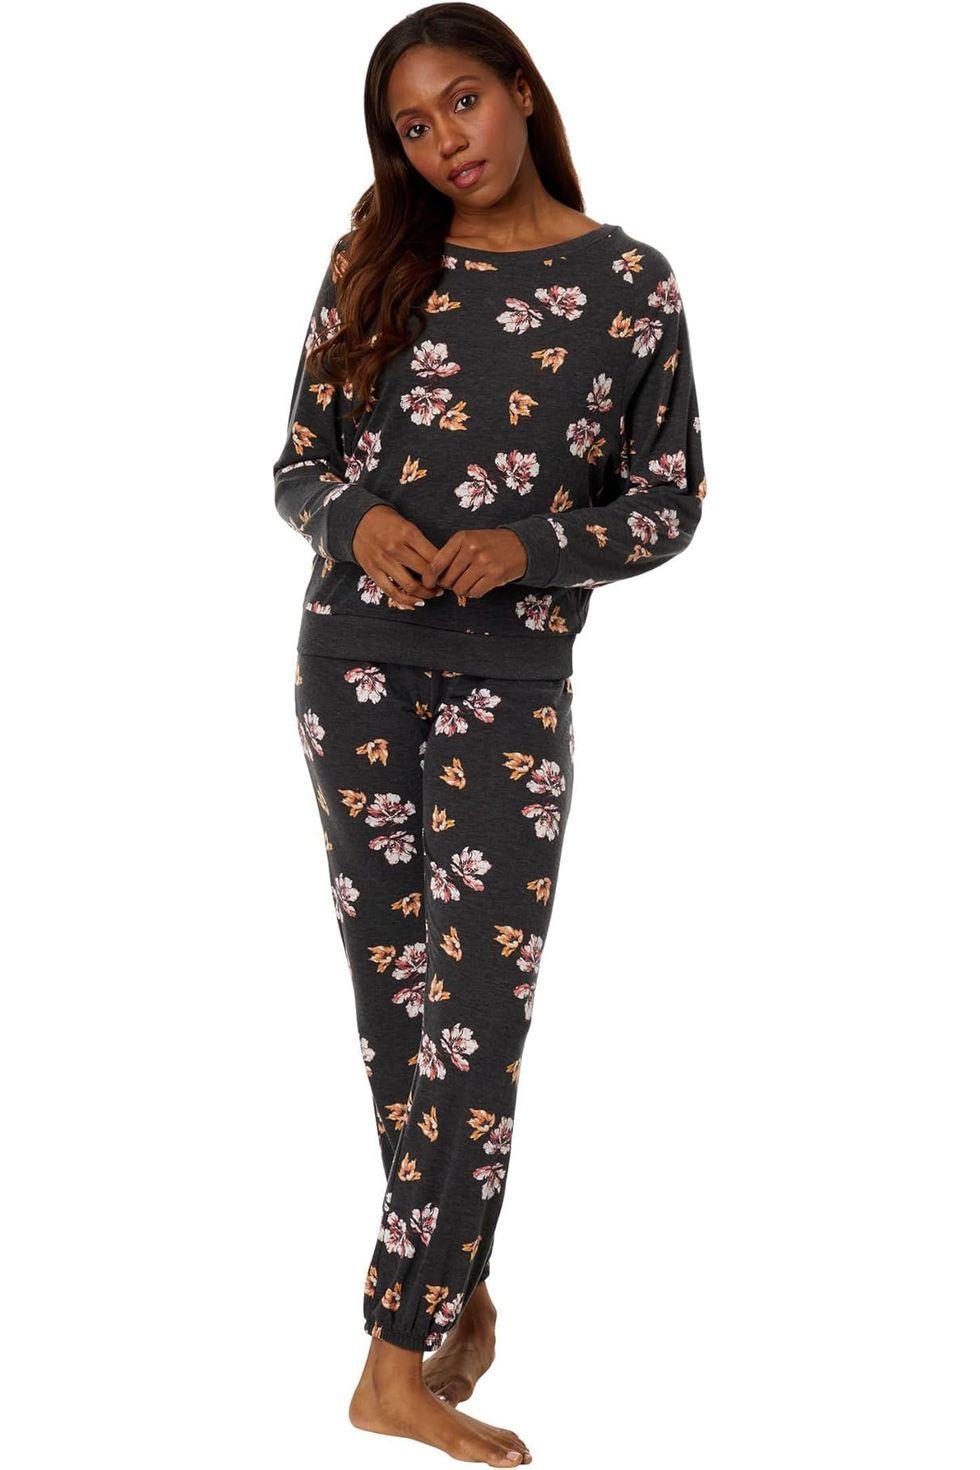 Women's :: Women's Sleepwear :: Pajamas :: 100% Lace Trim Black